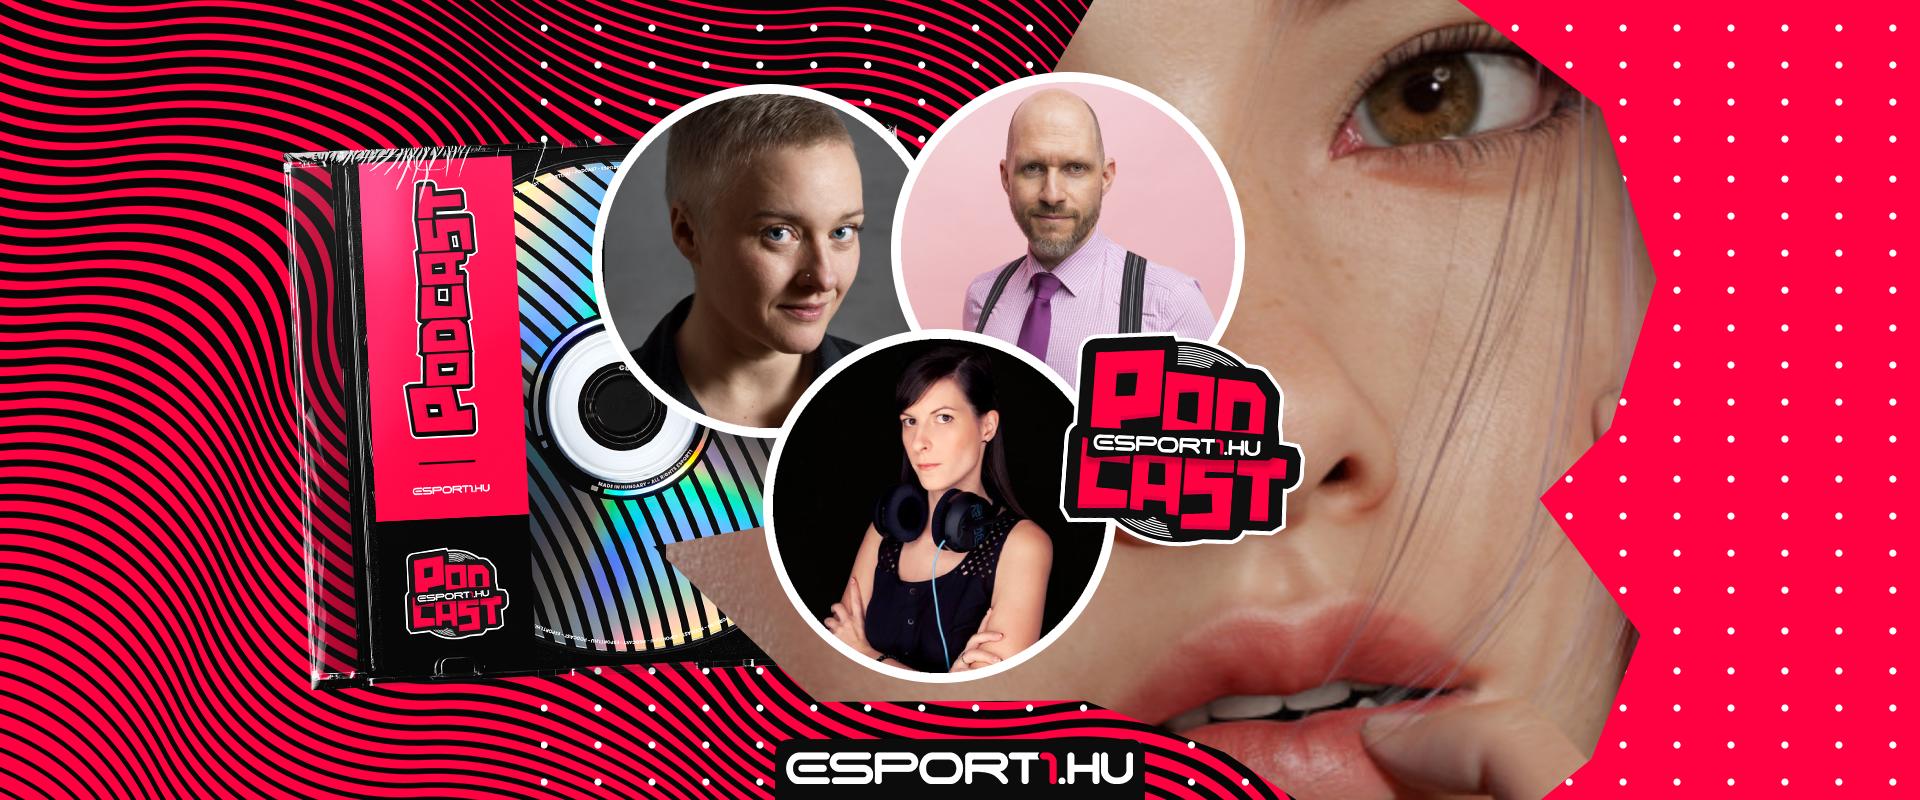 Esport1 podcast: Ana, az attraktív robotlány esete a gaminggel